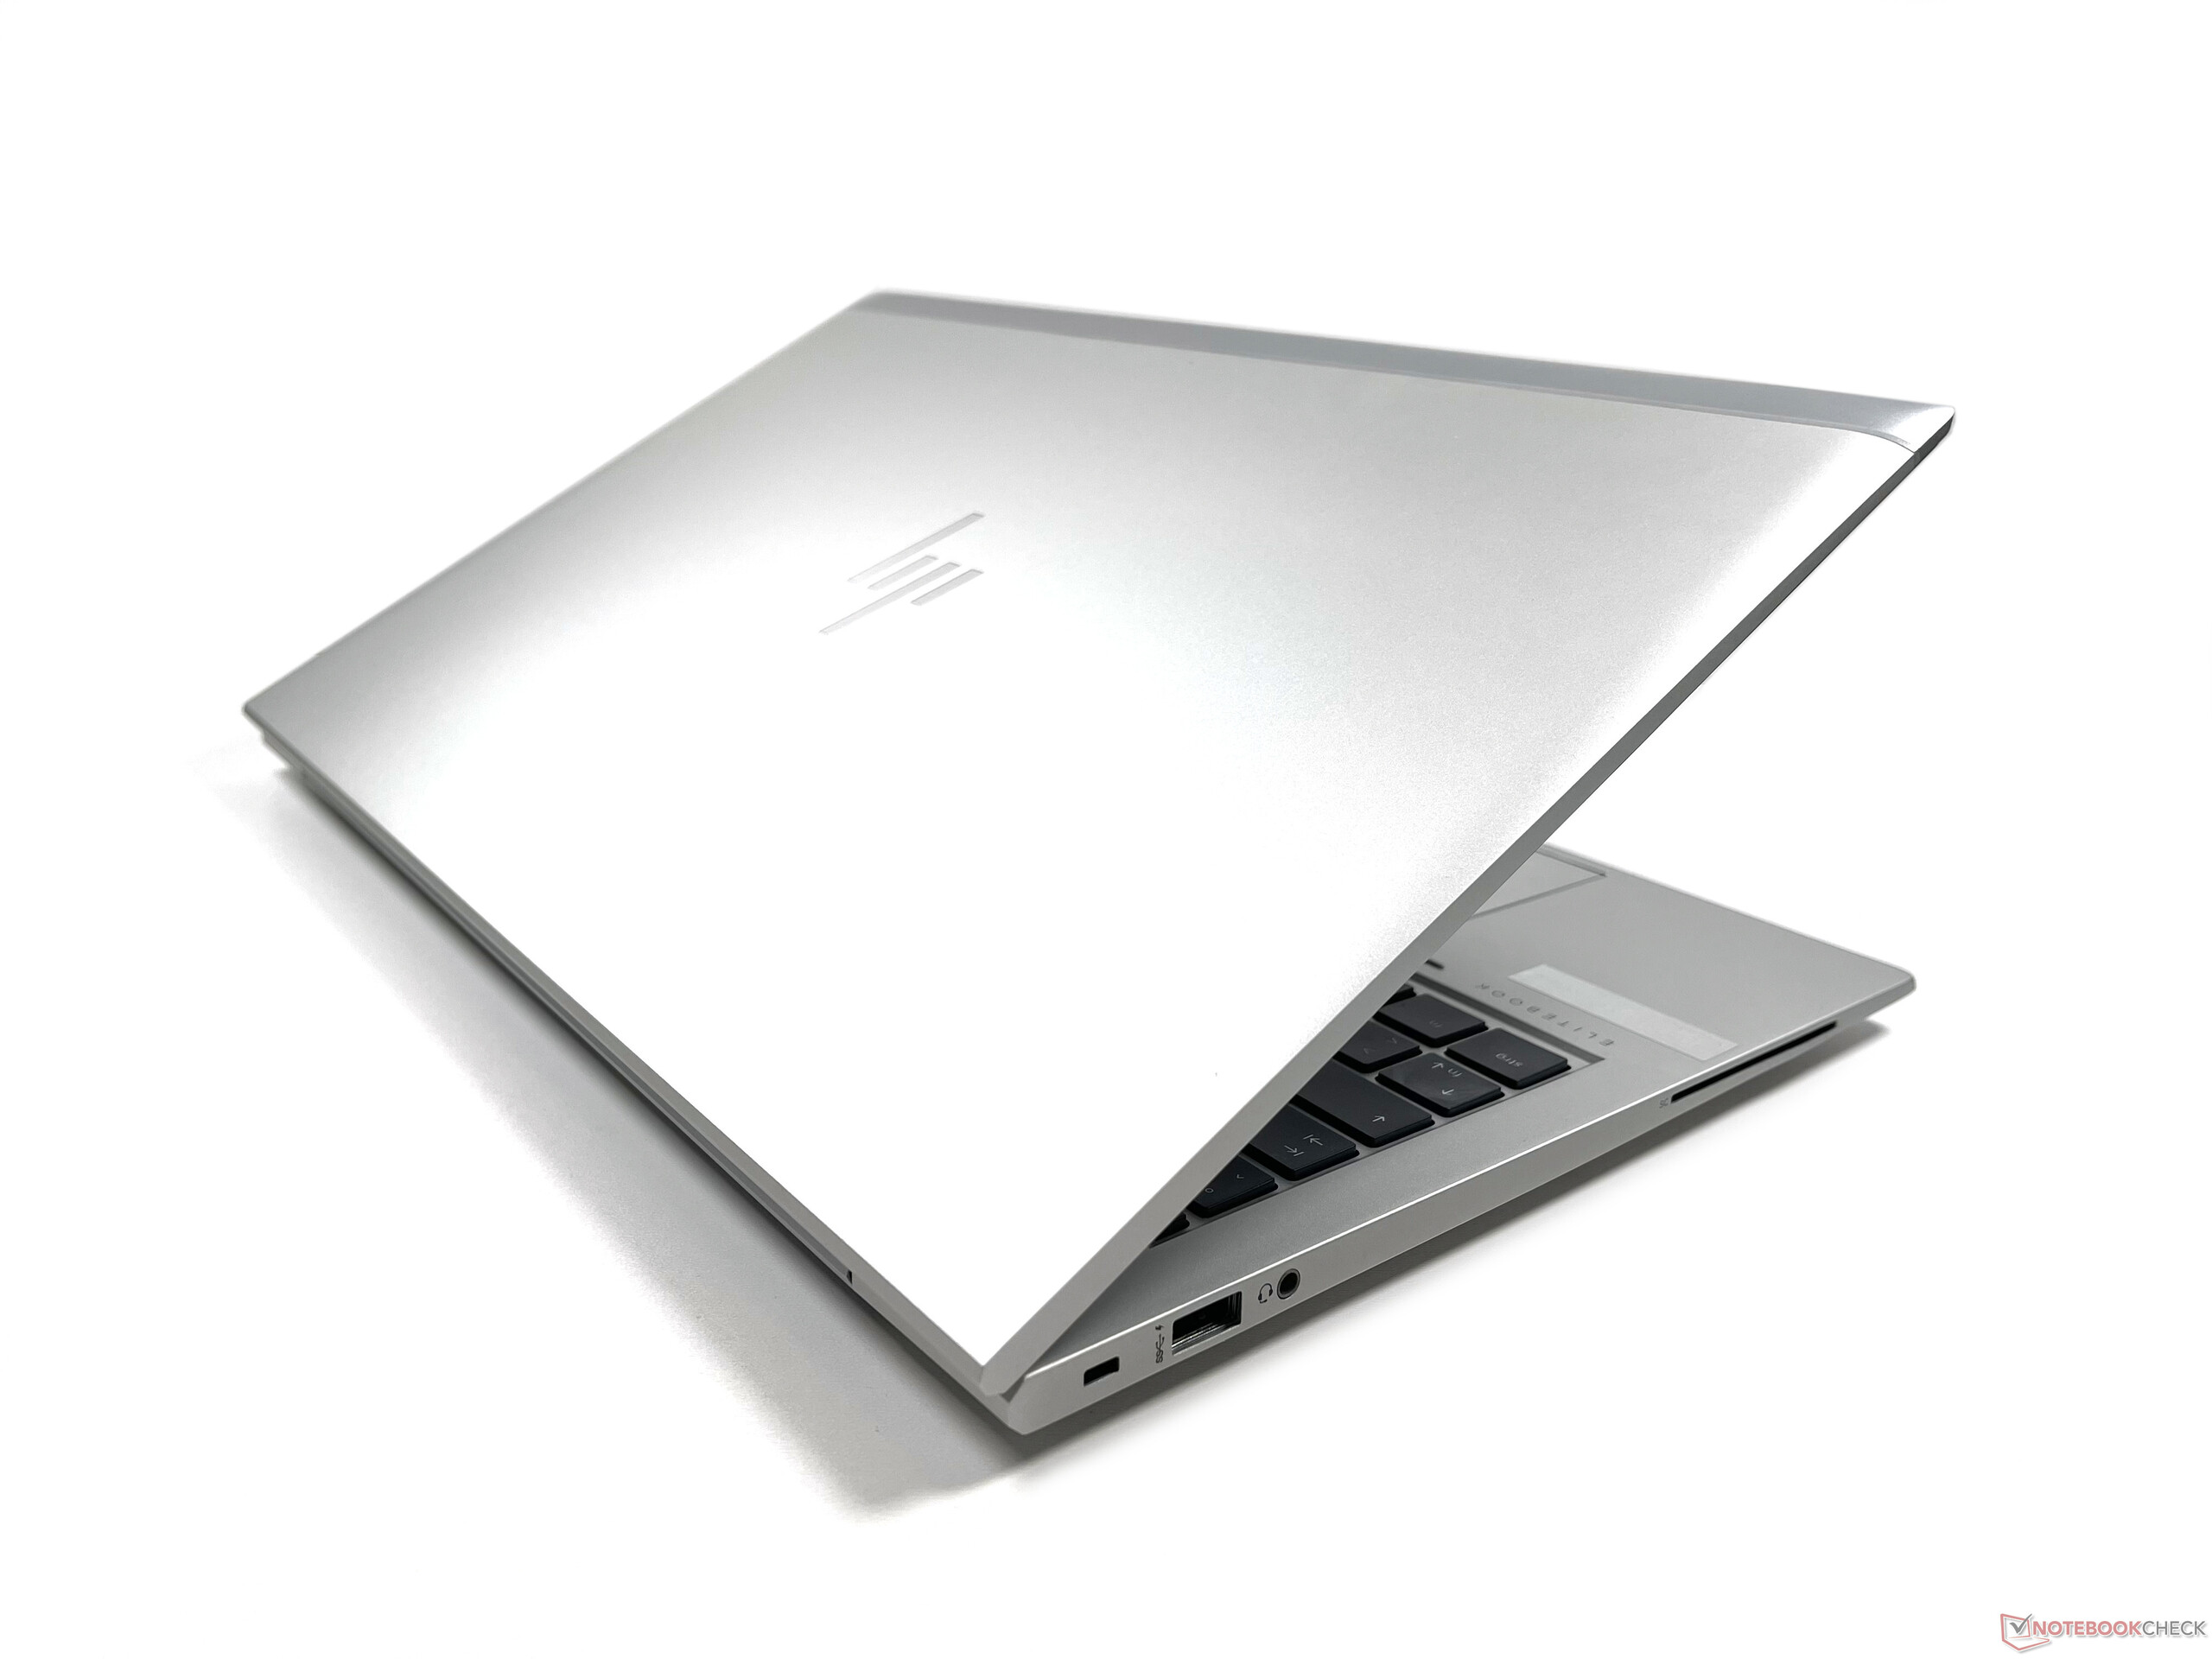 HP EliteBook 840 G5 Core i5 8th Gen Laptop - Bad DIMM - Discount